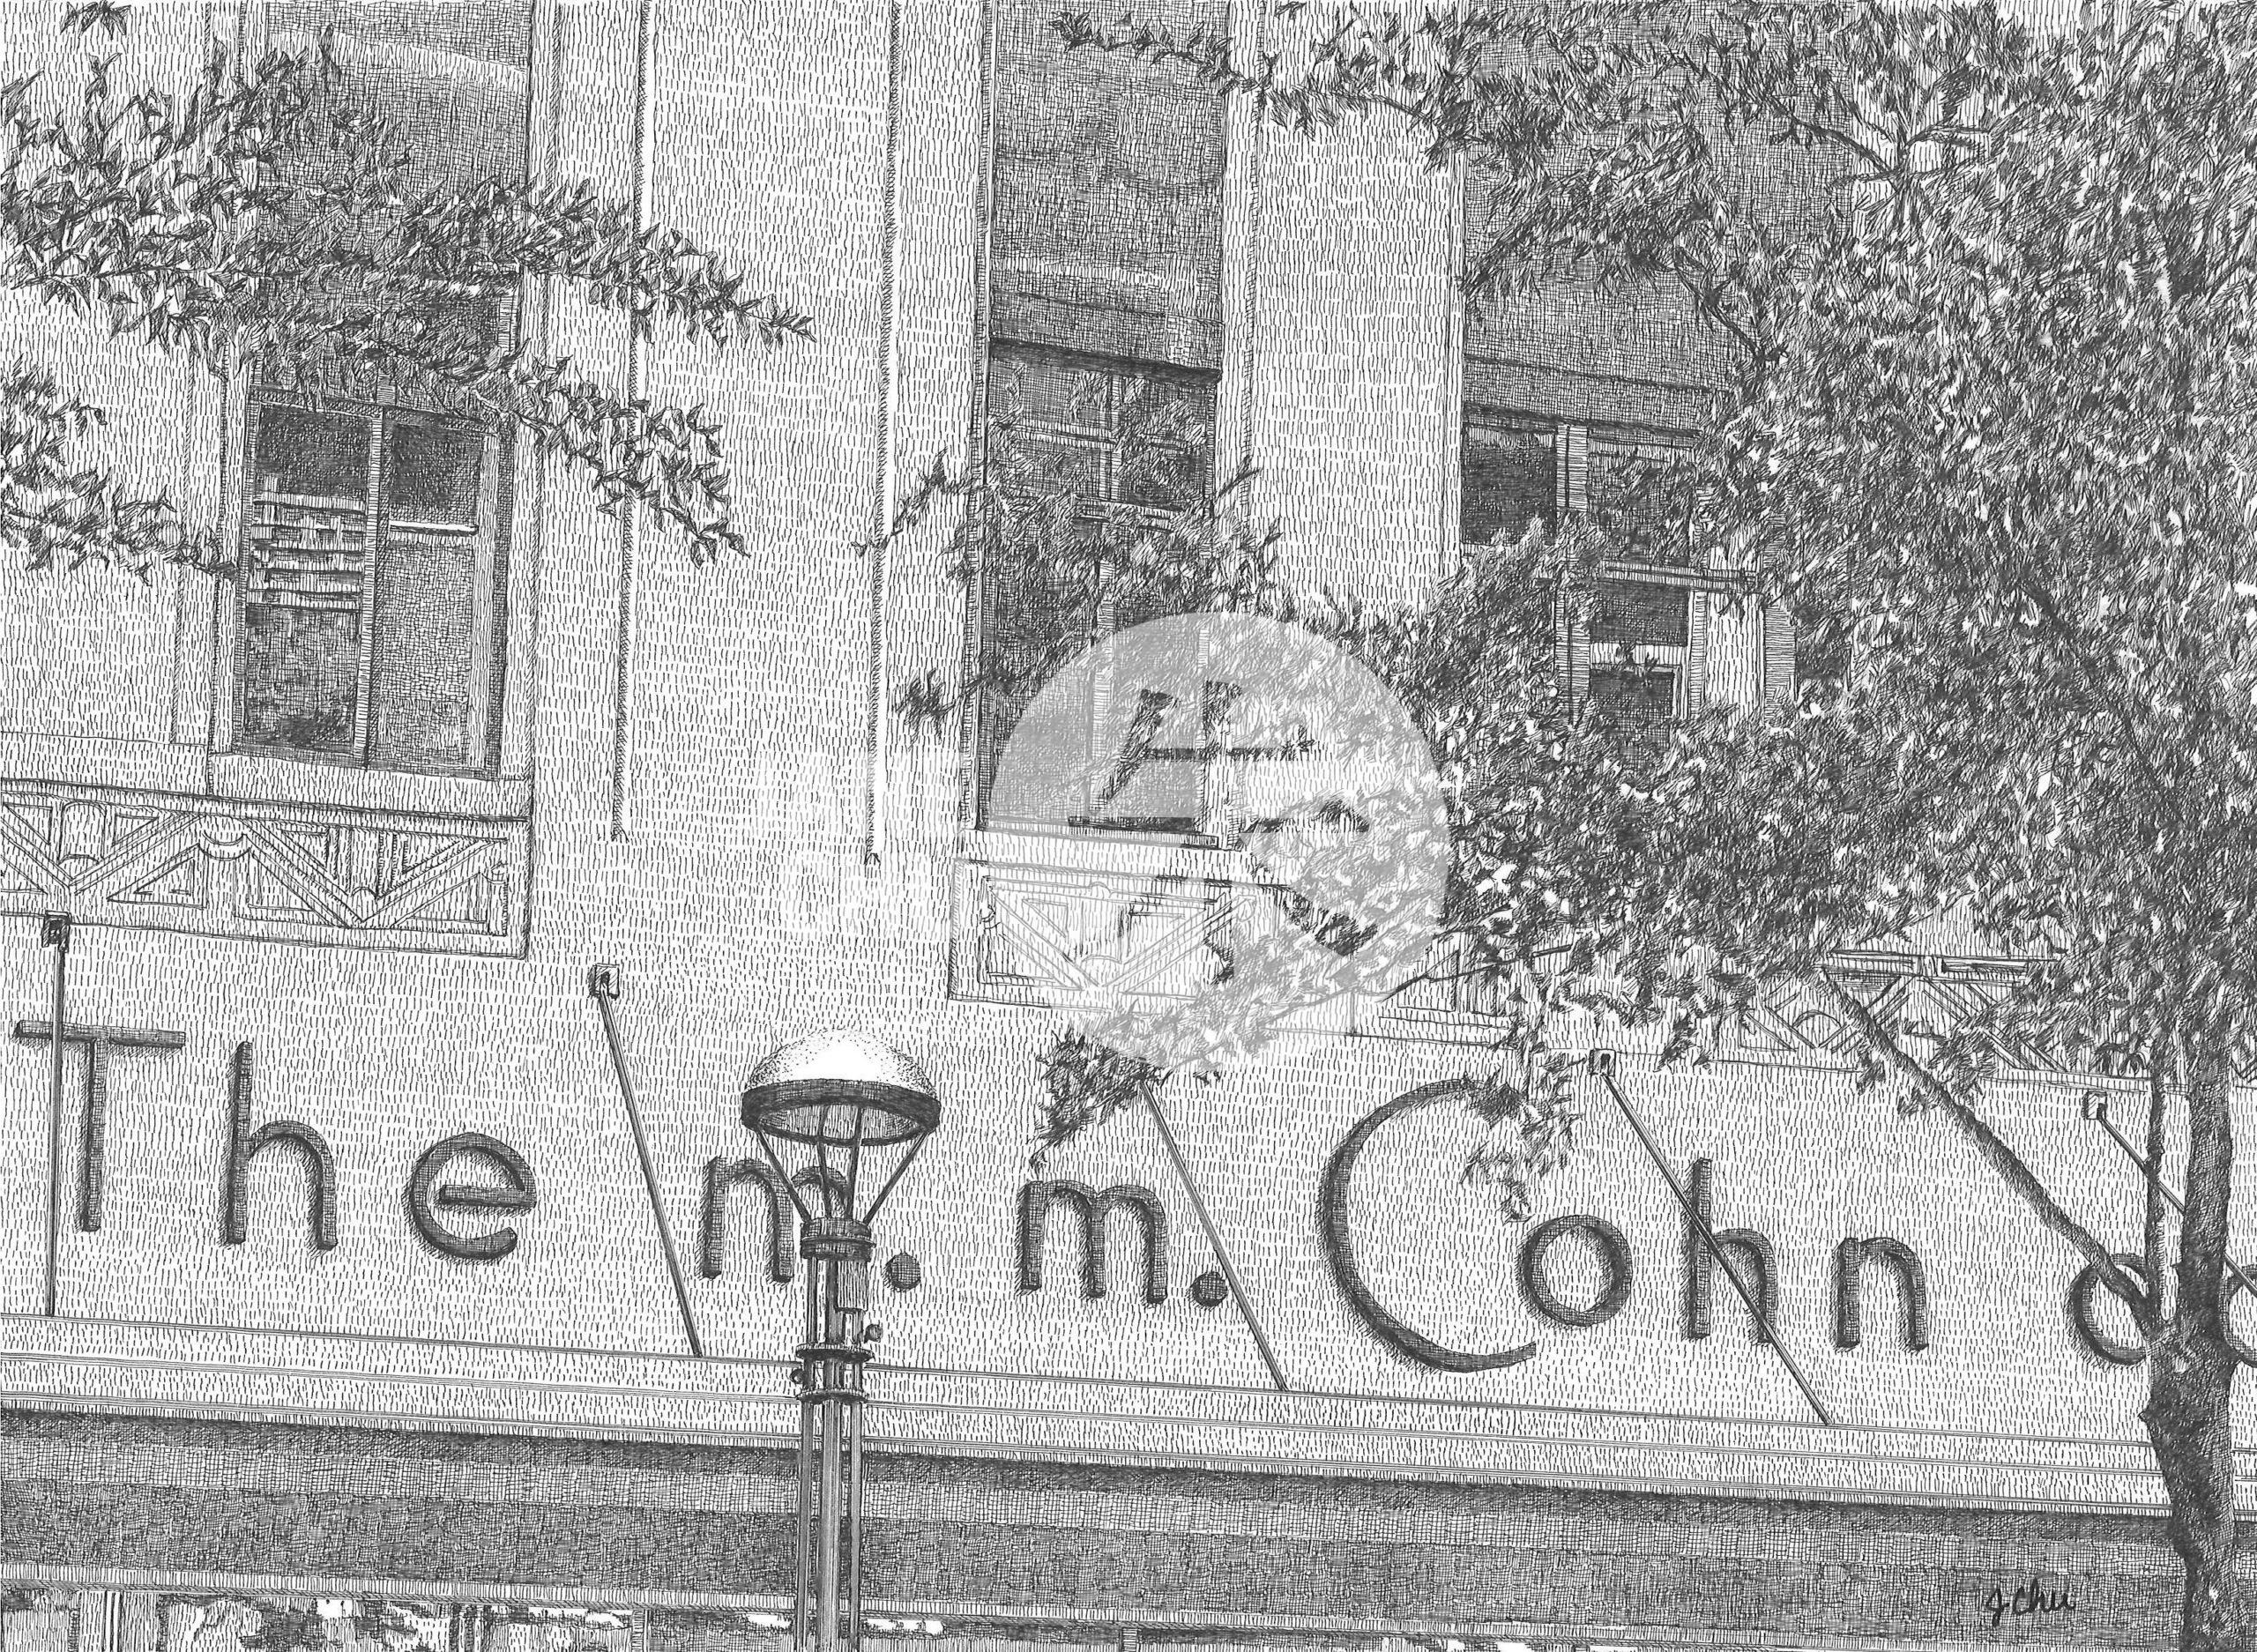 Historic M.M. Cohn Department Store by Jane Chu